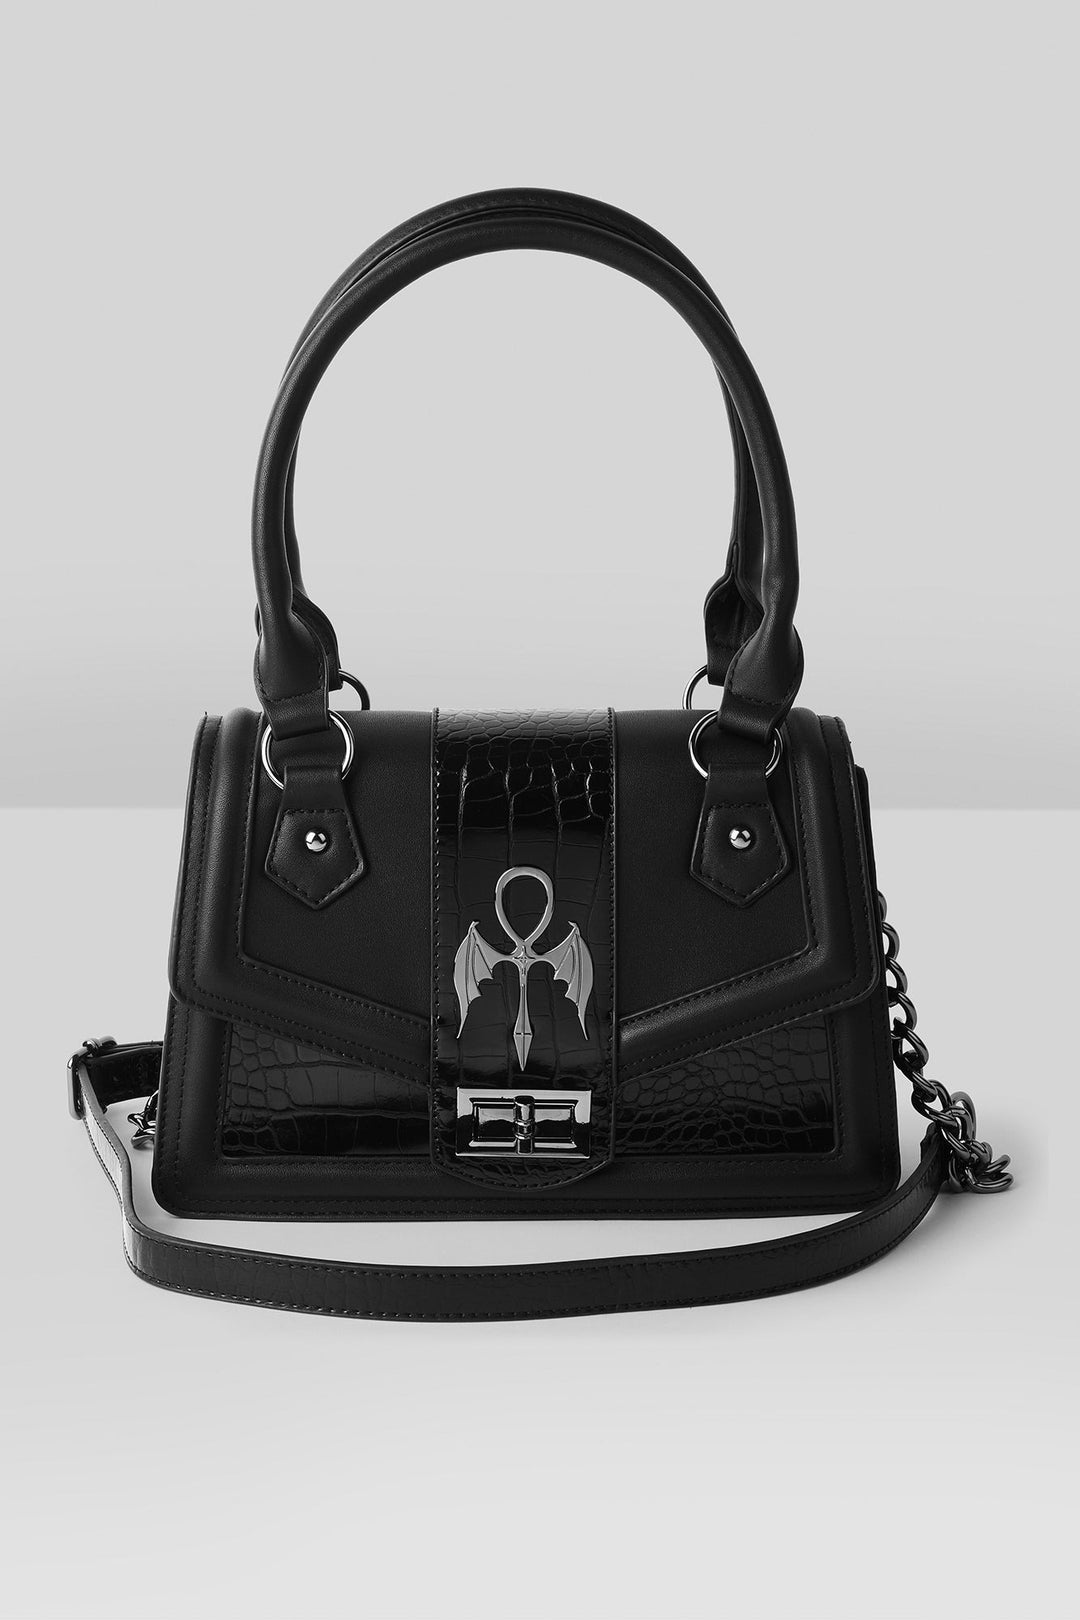 witchy black handbag